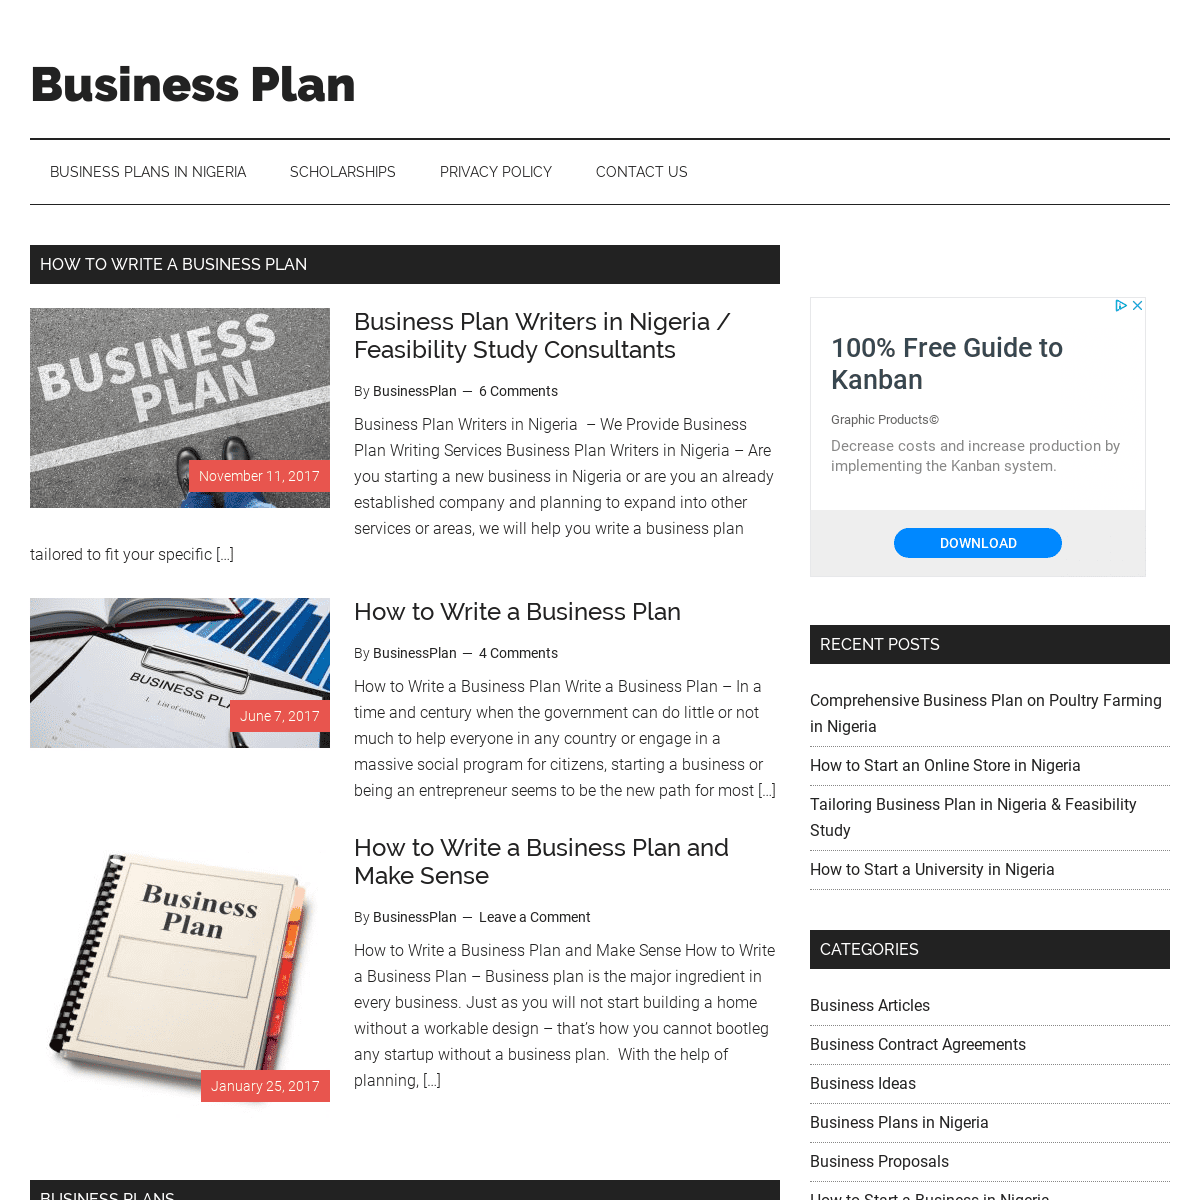 Business Plan - Business Plan Writers in Nigeria